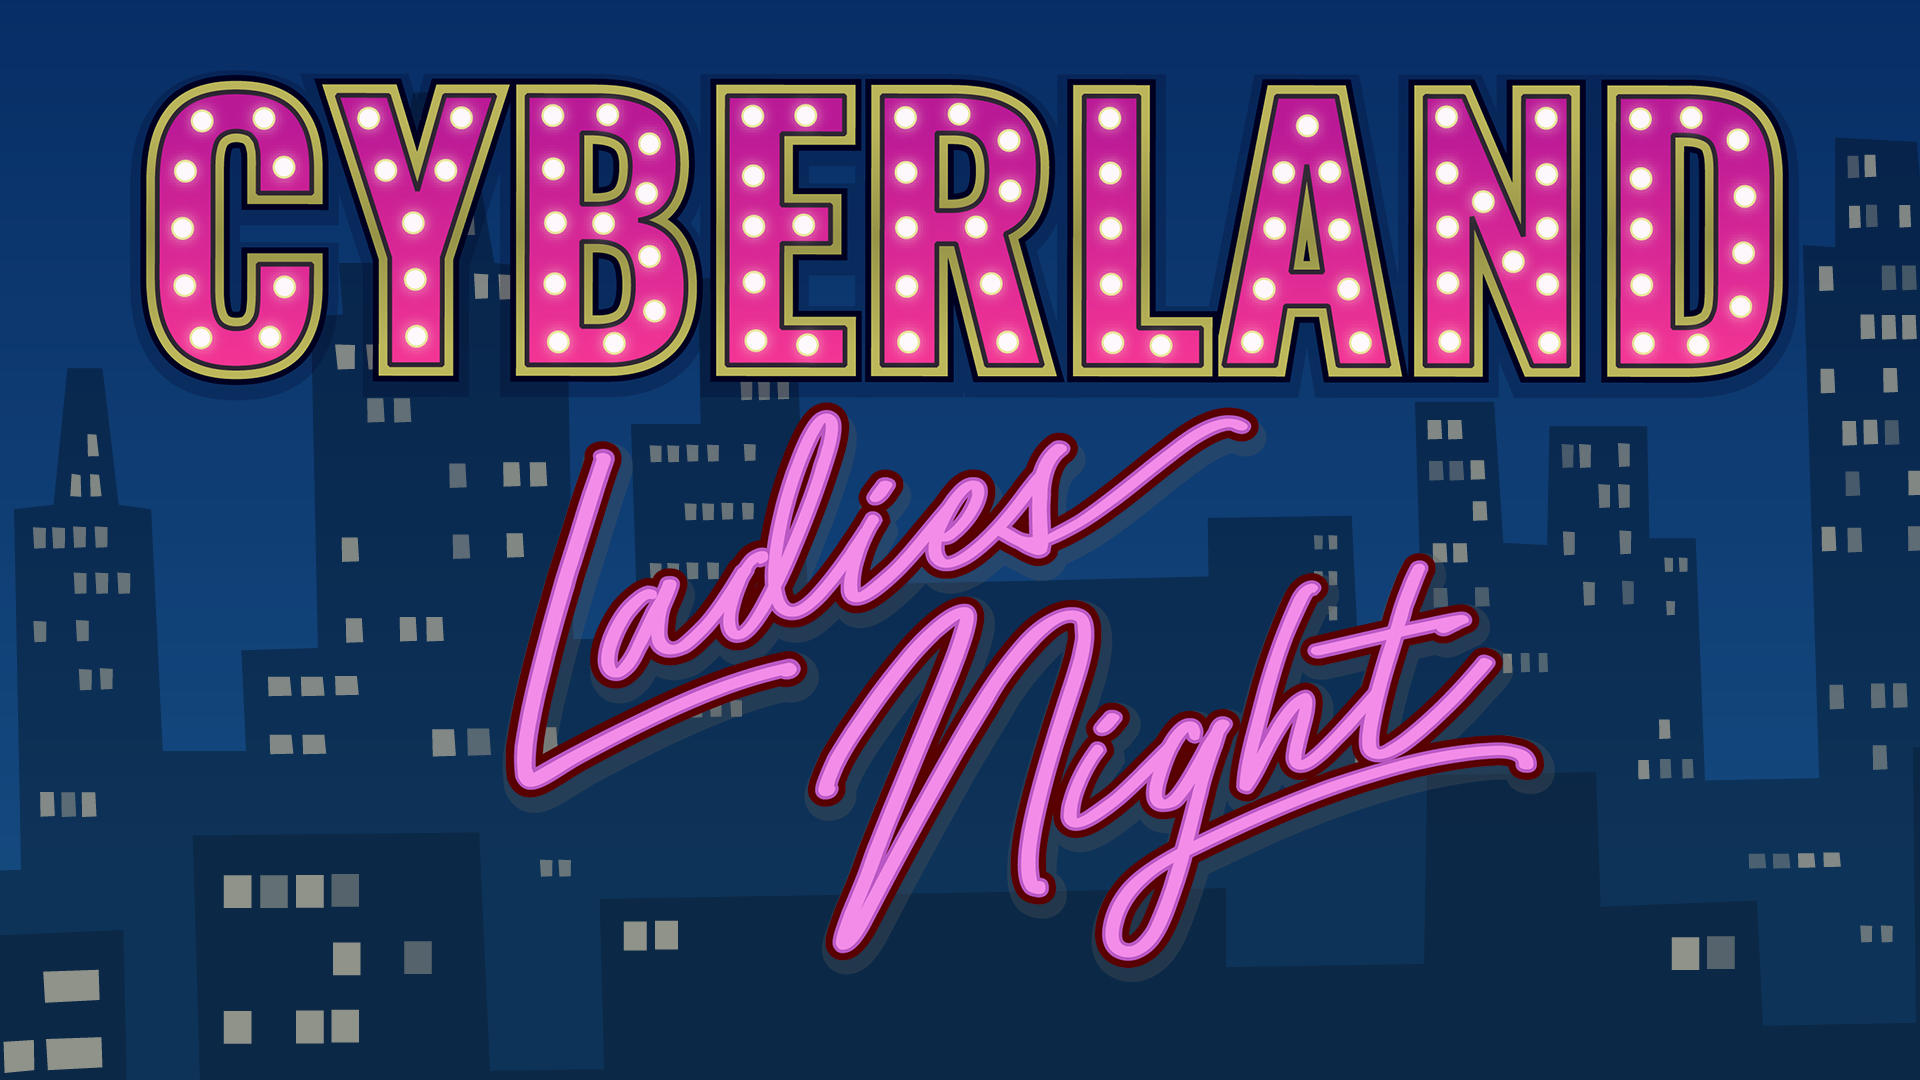 Logo CyberLand Ladies Night